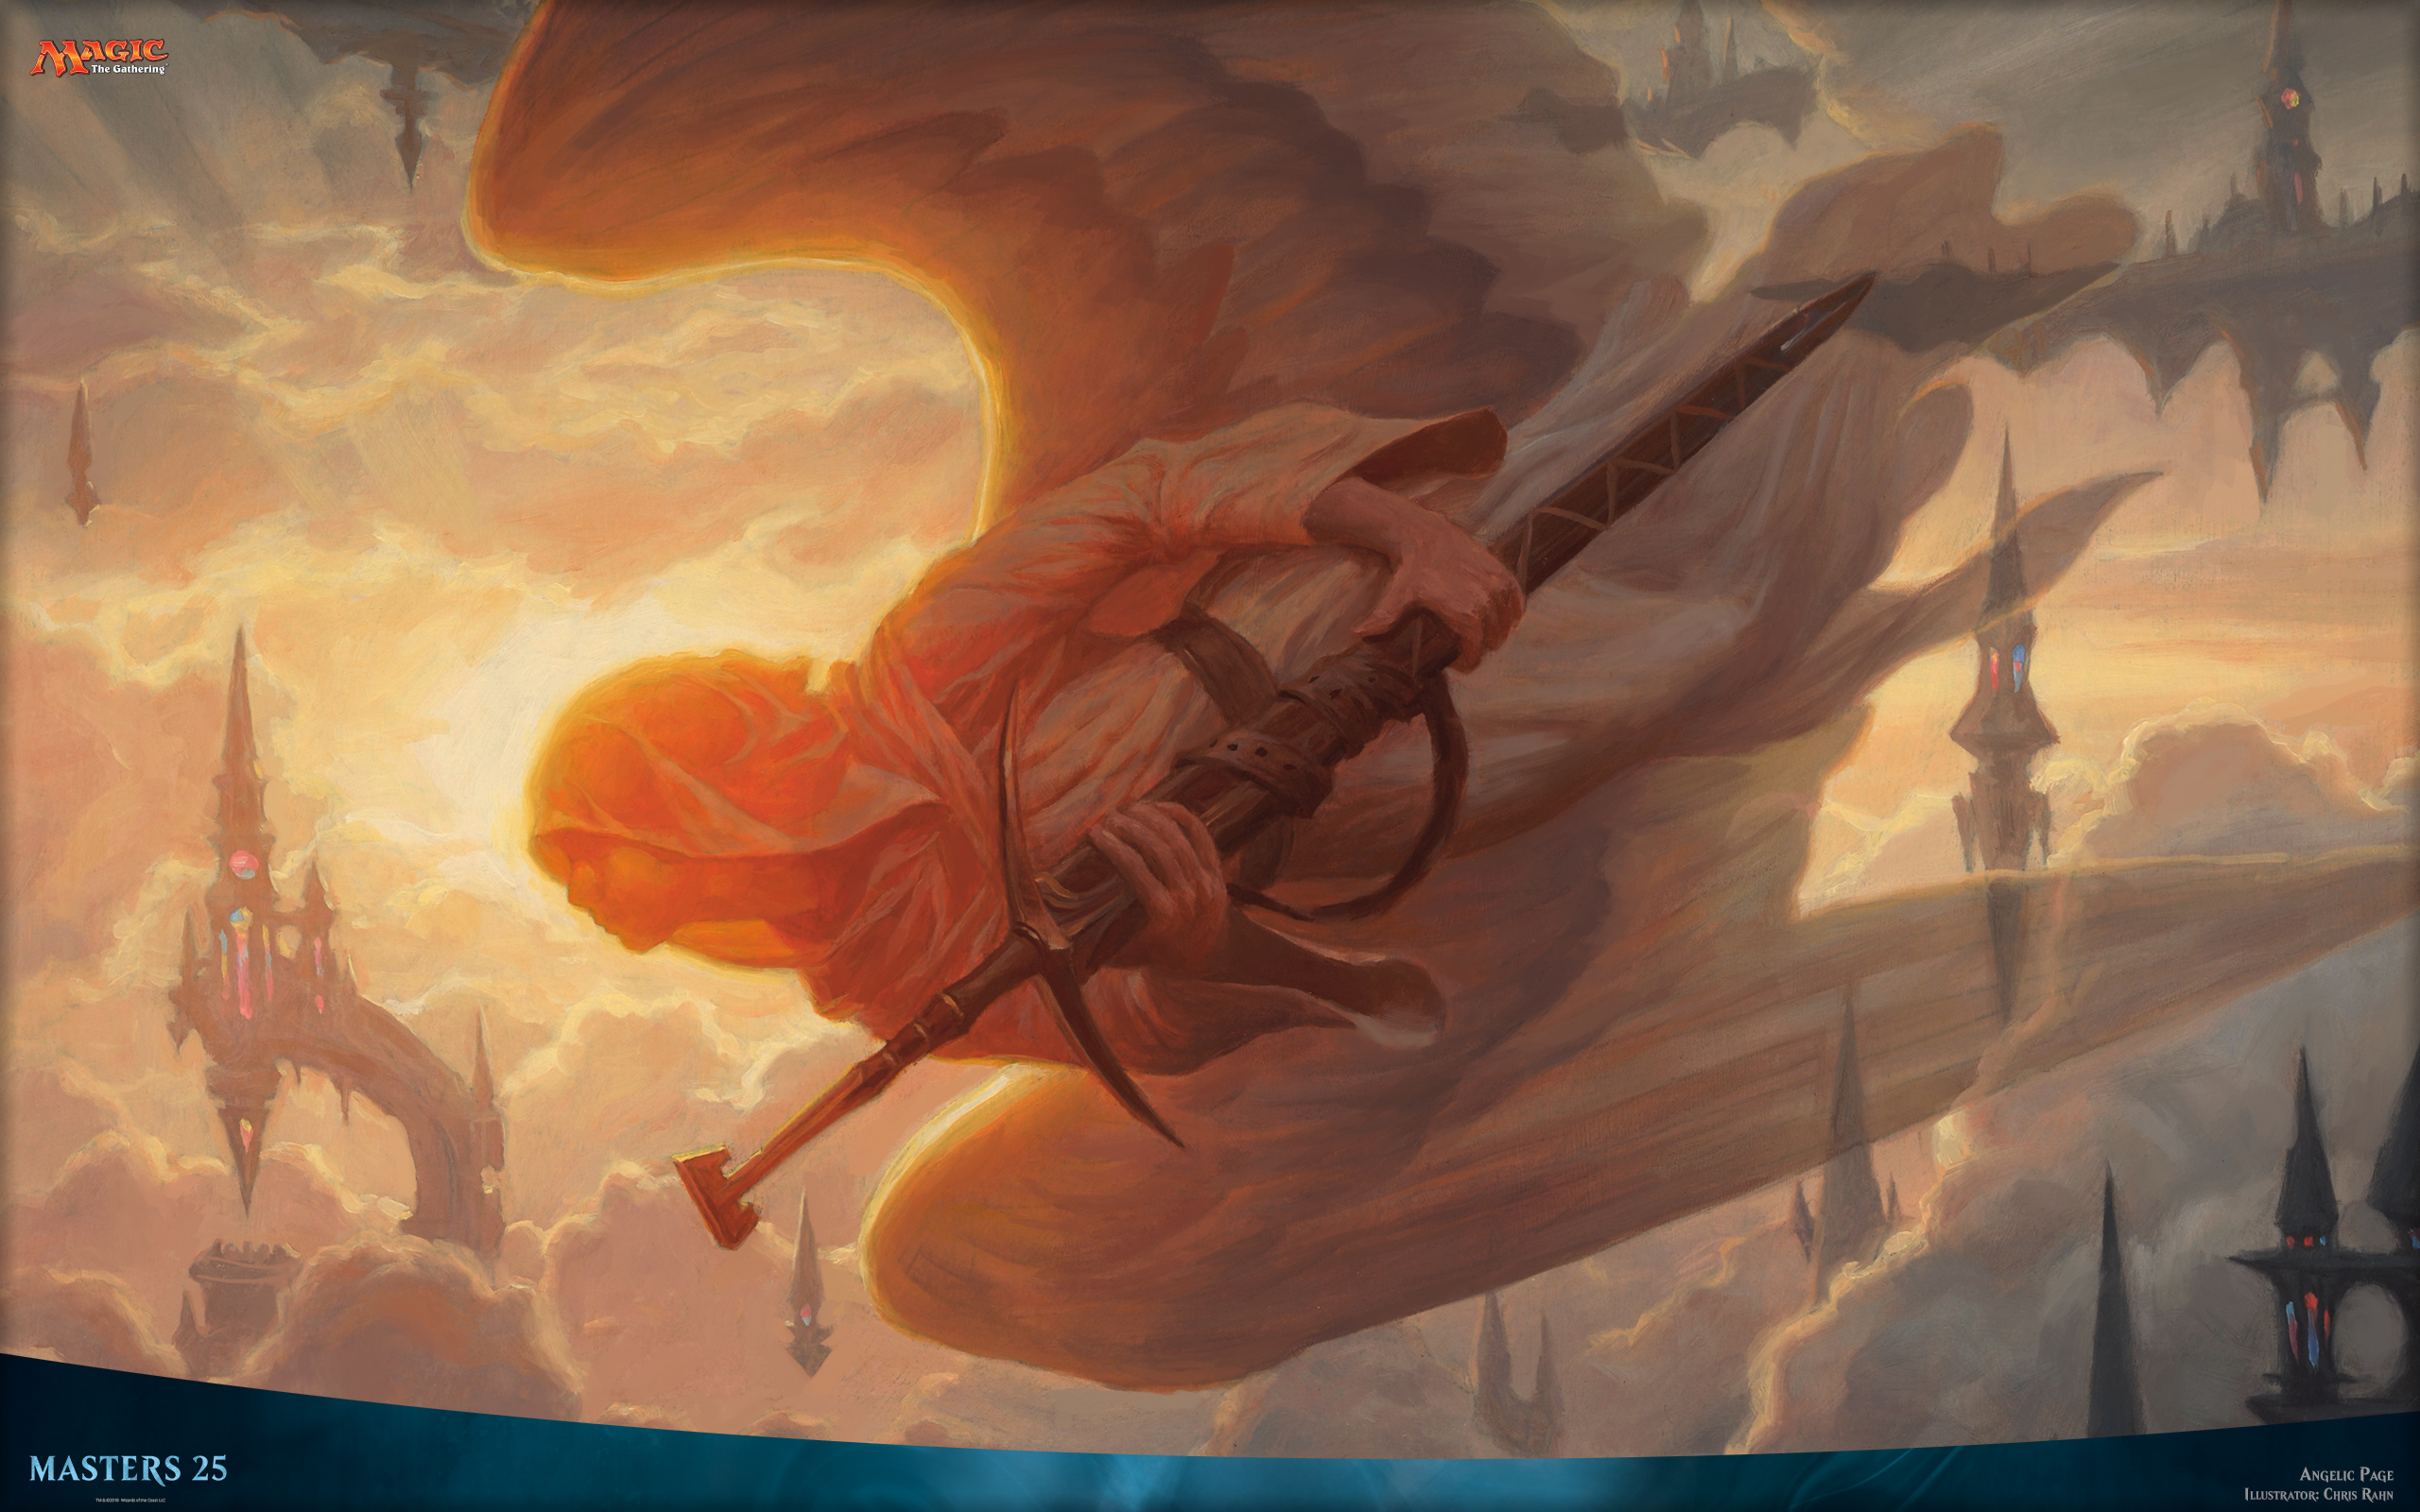 General 2560x1600 archangel Magic: The Gathering fantasy art digital art watermarked